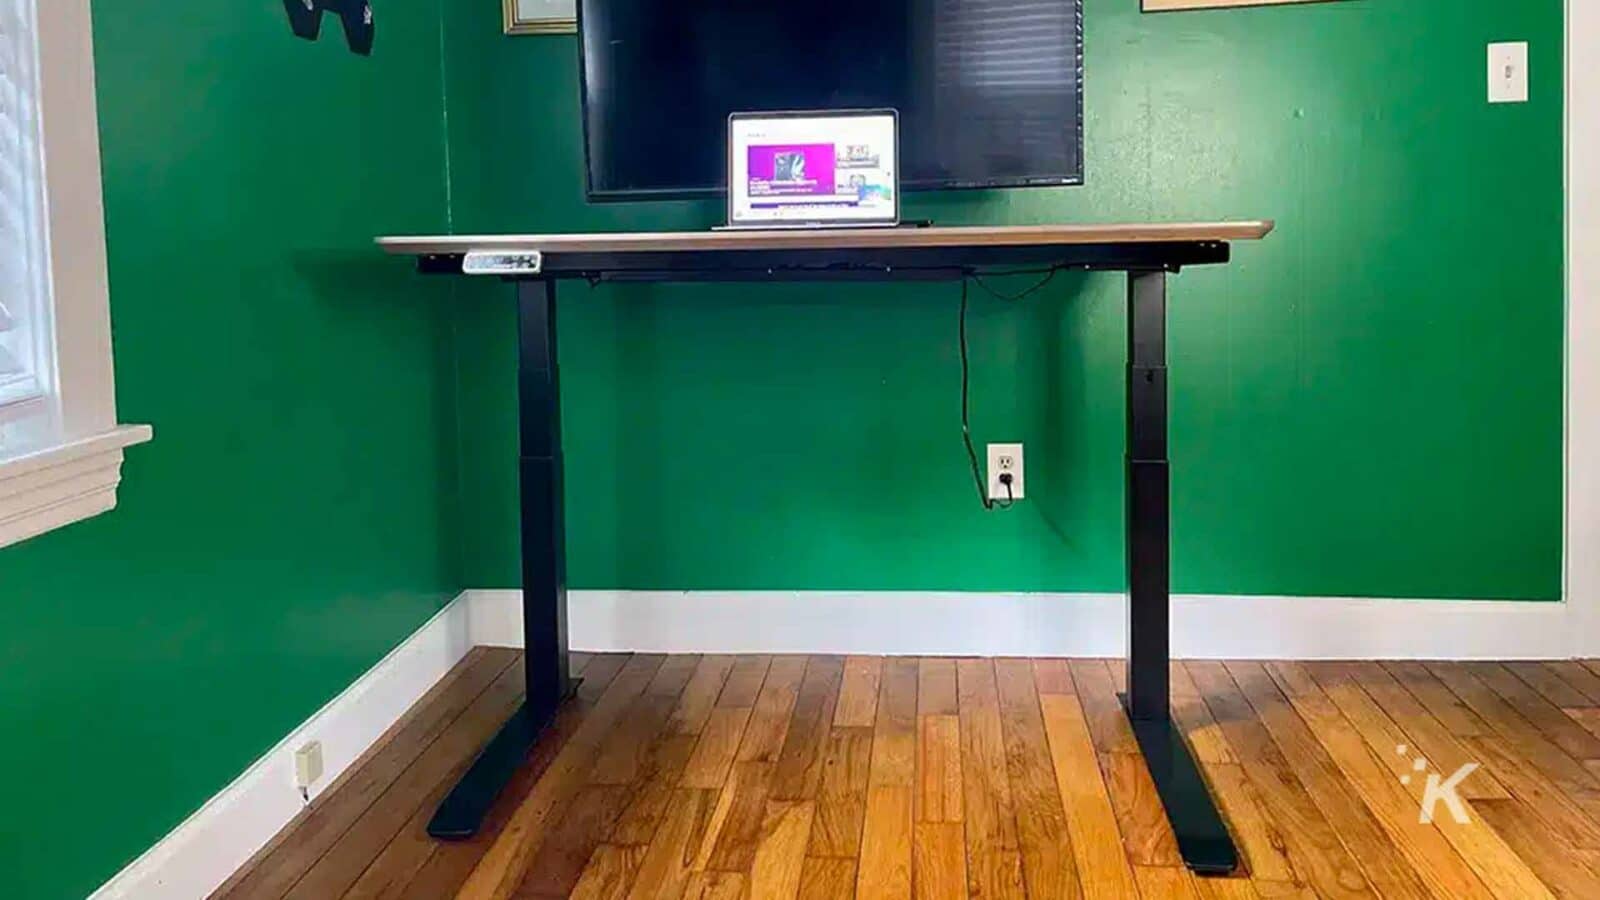 La scrivania contiene un computer.